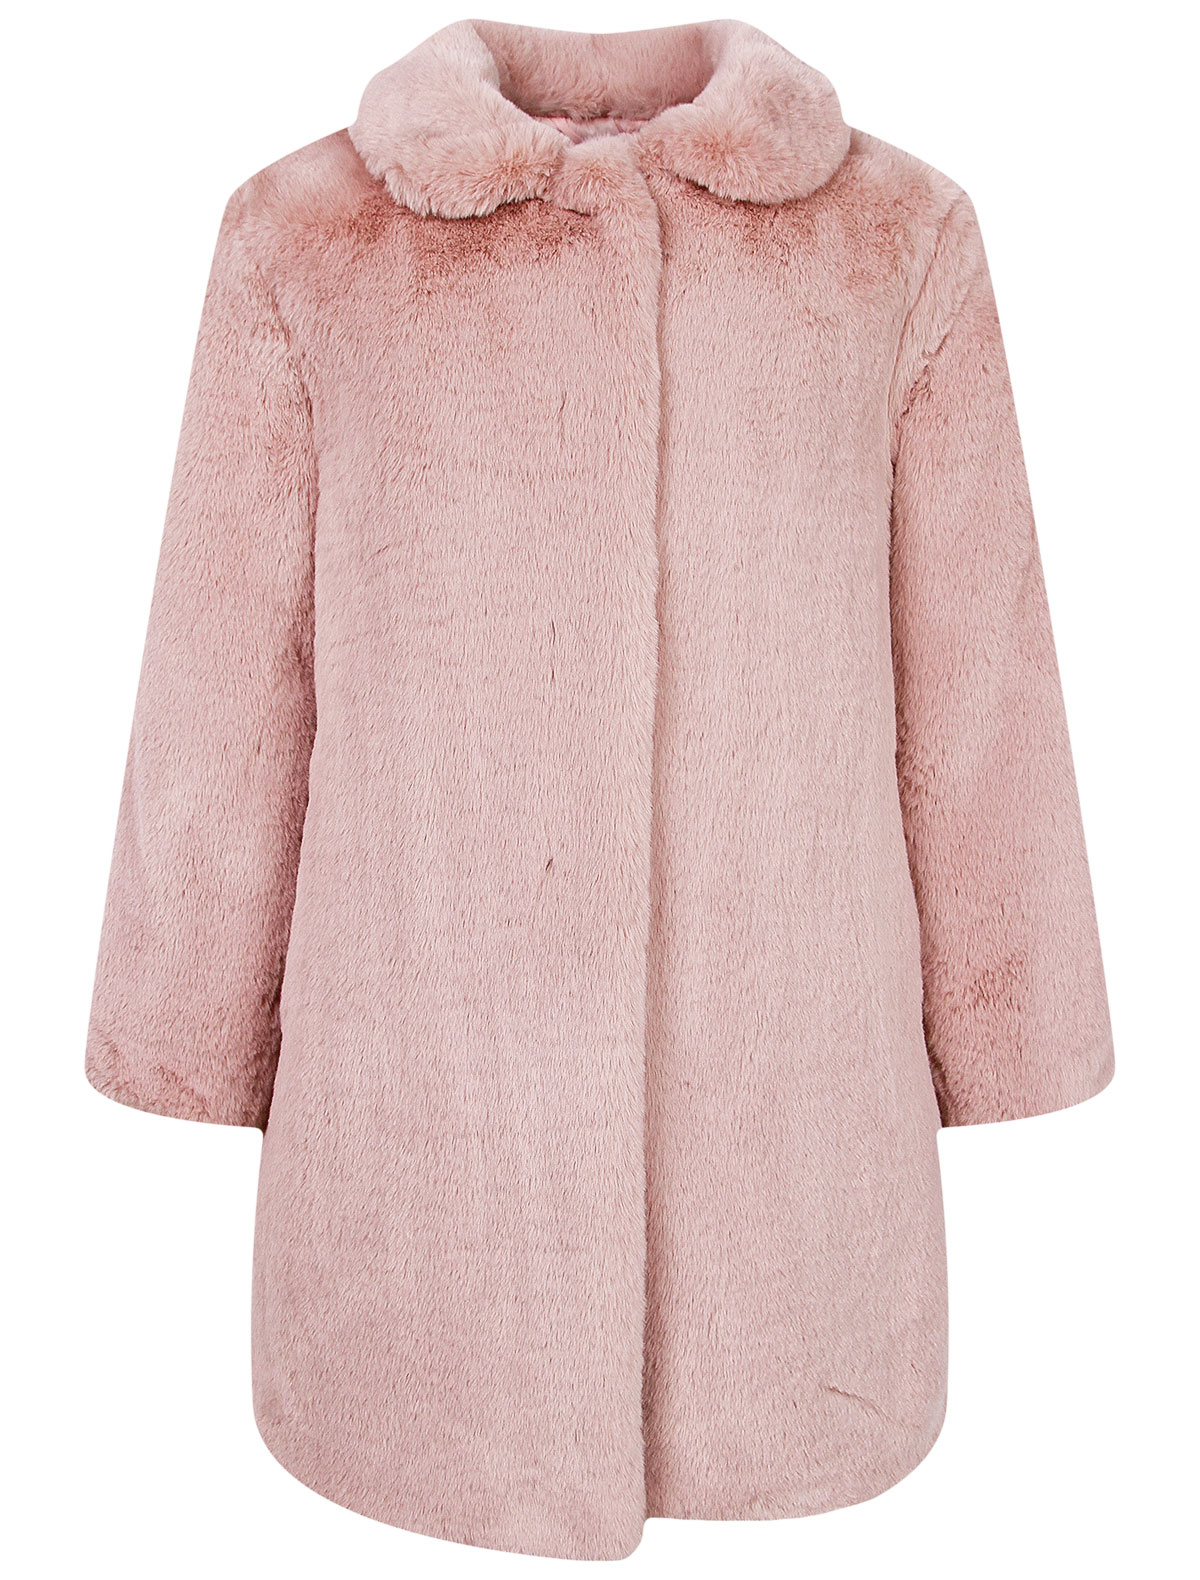 Пальто Il Gufo 2334380, цвет розовый, размер 6 1124509180441 - фото 1